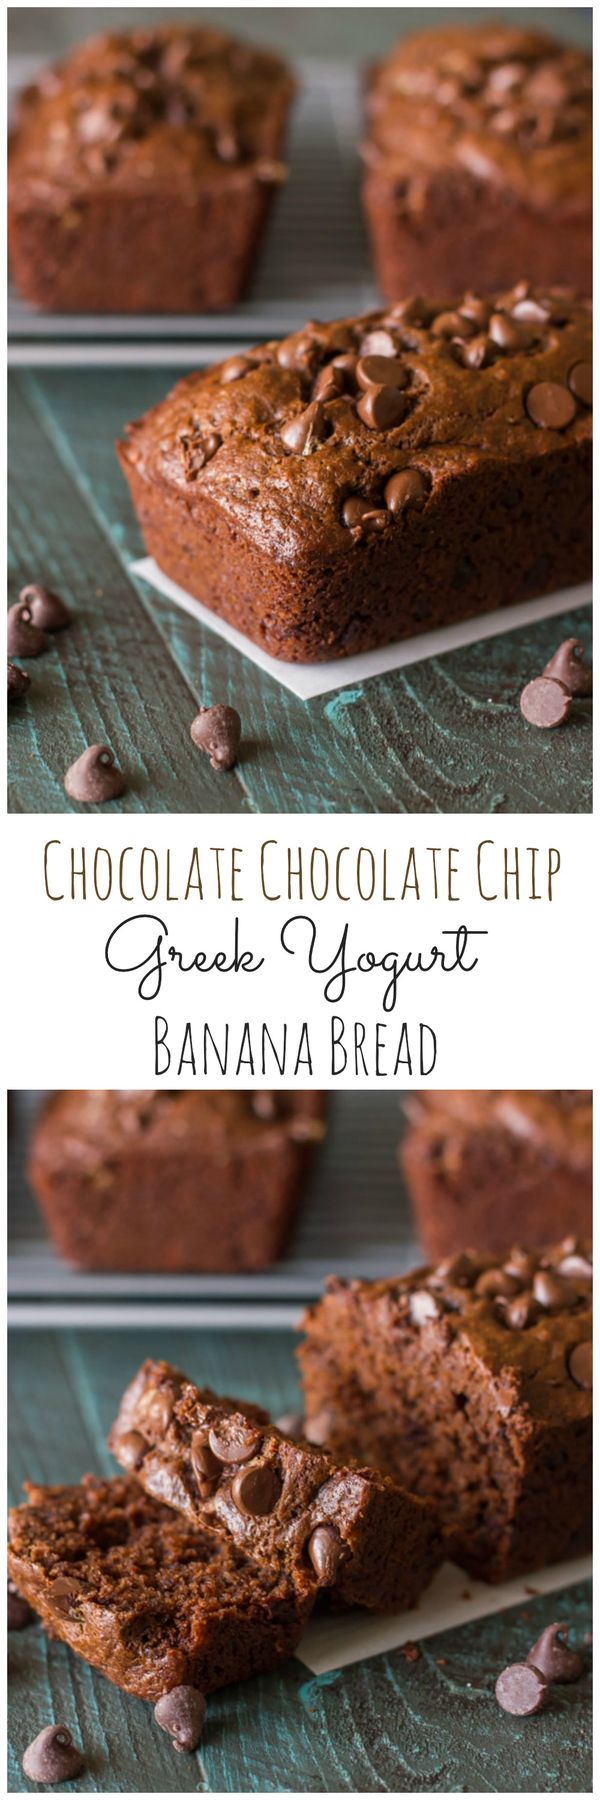 Chocolate Chocolate Chip Greek Yogurt Banana Bread